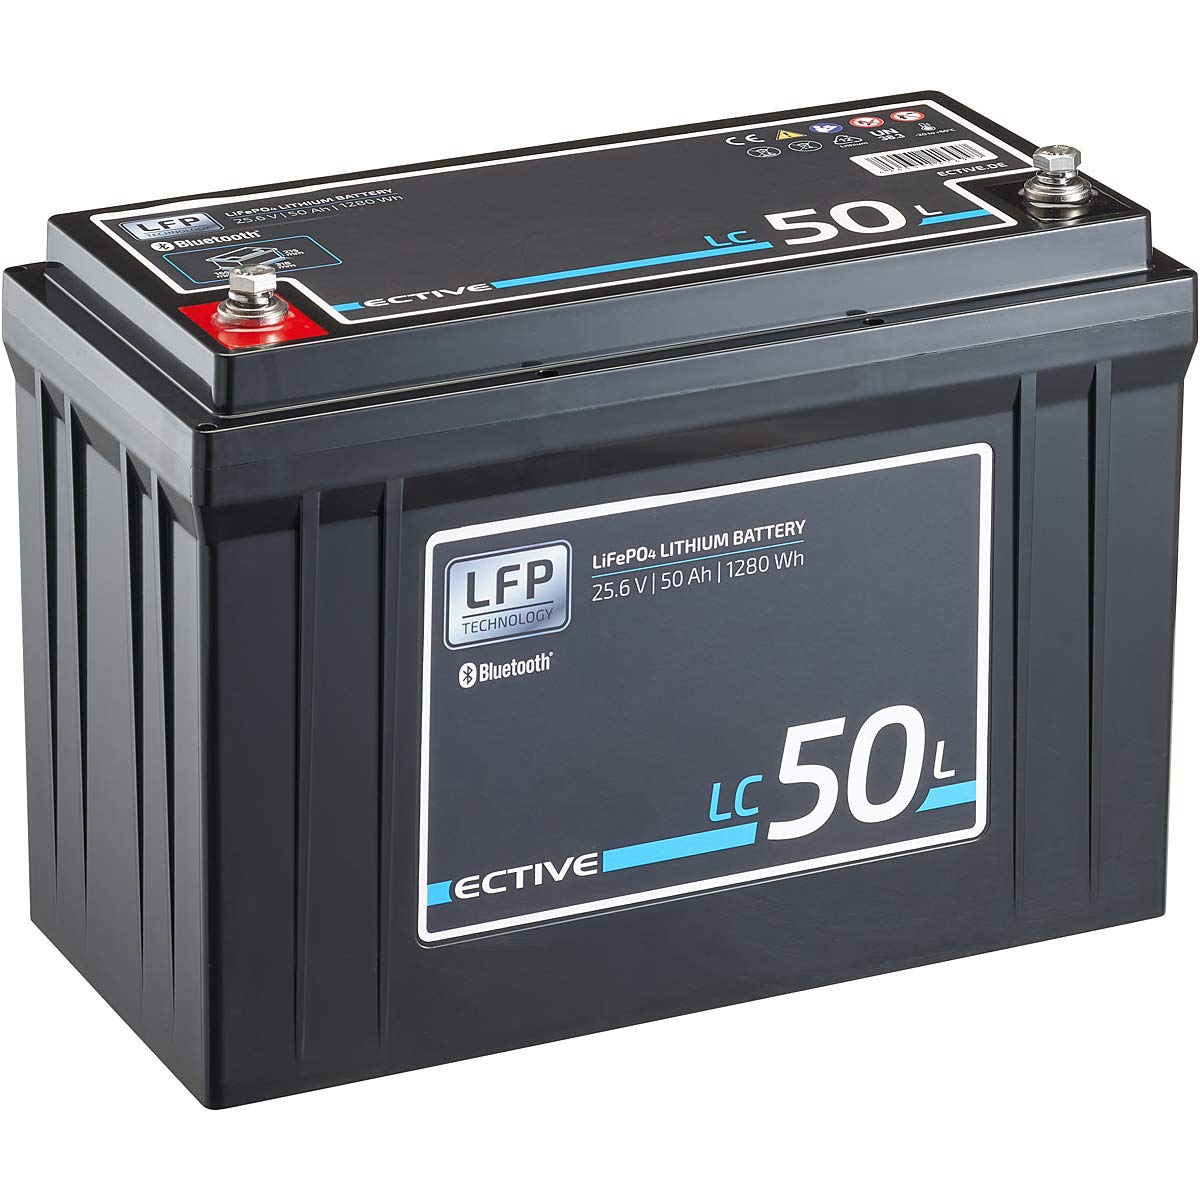 ECTIVE LiFePO4 Batterie LC50L BT - 24V, 50Ah, 1280Wh, Bluetooth inklusive App - Lithium-Eisenphosphat Versorgungsbatterie, Bootsbatterie, Solarbatterie für Wohnwagen, Wohnmobil, Camper von ECTIVE